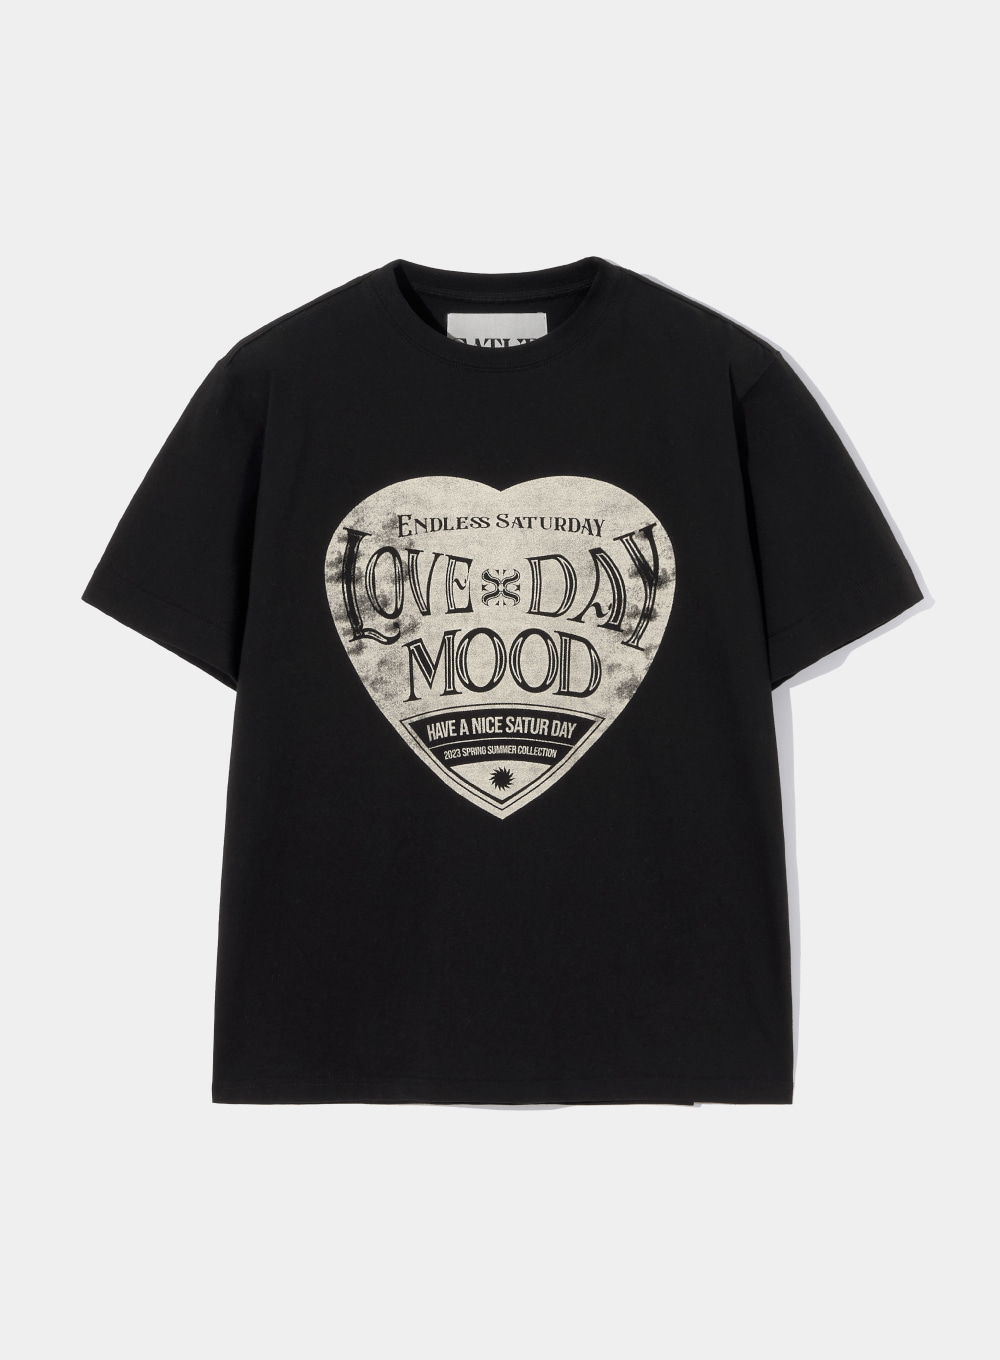 Saturday Retro Mood Graphic T-Shirts Vintage Black